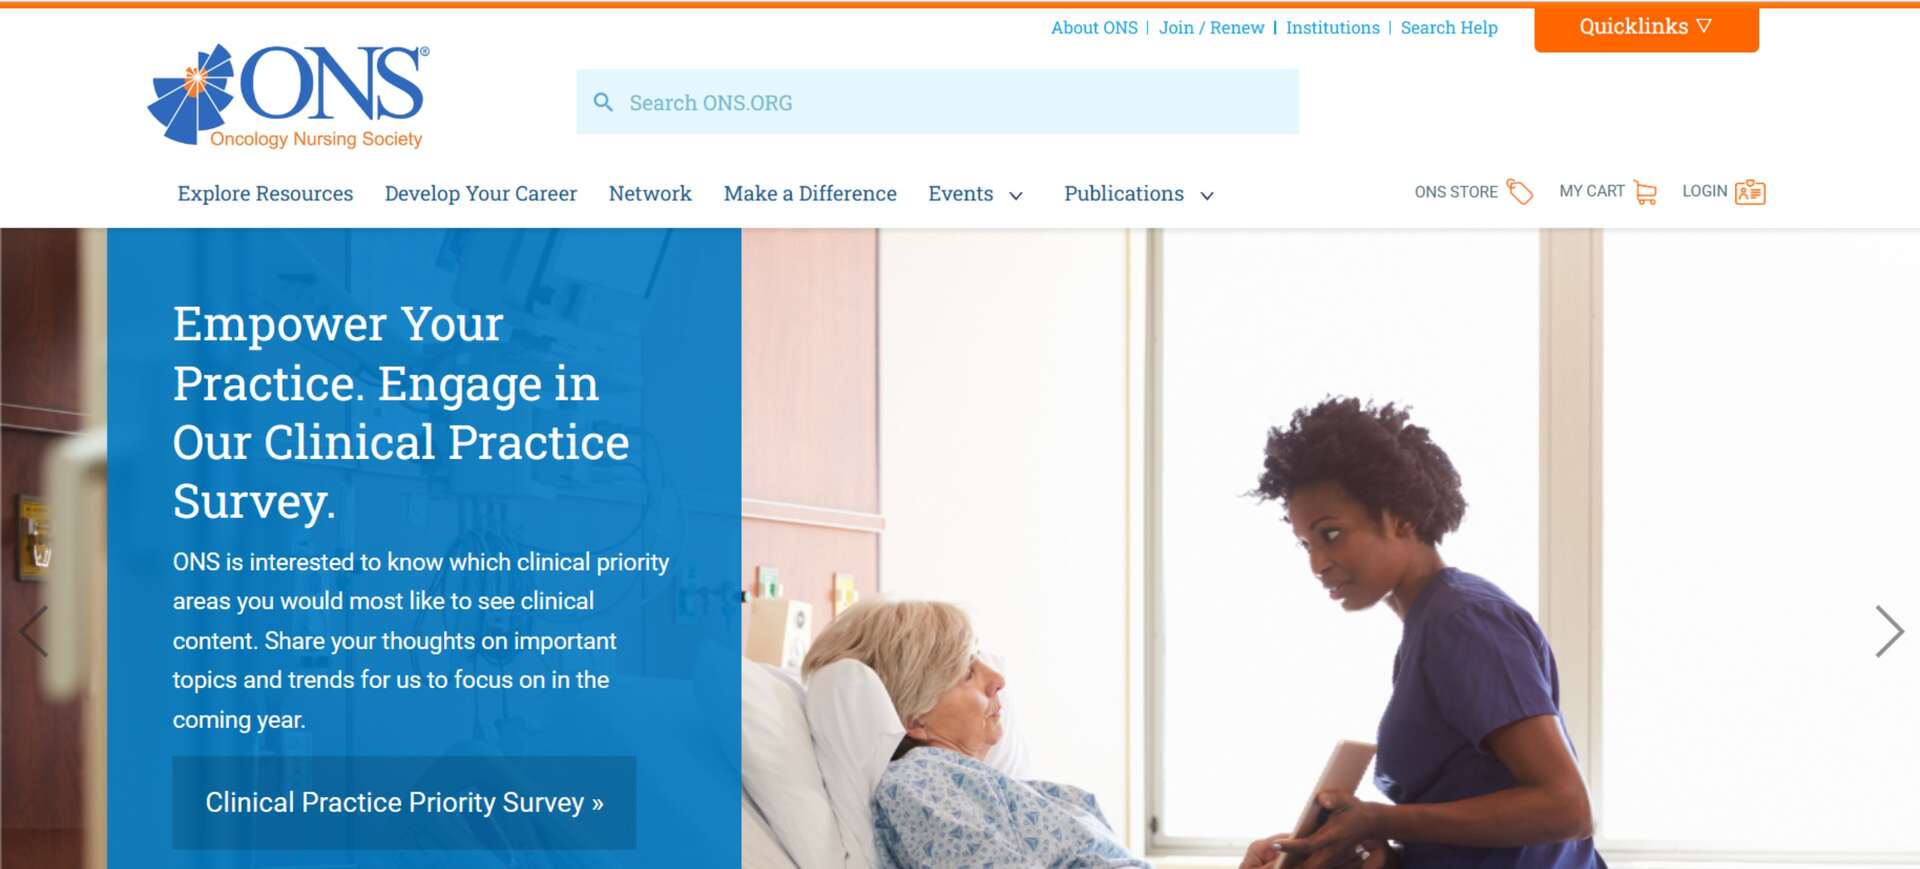 Oncology Nursing Society homepage